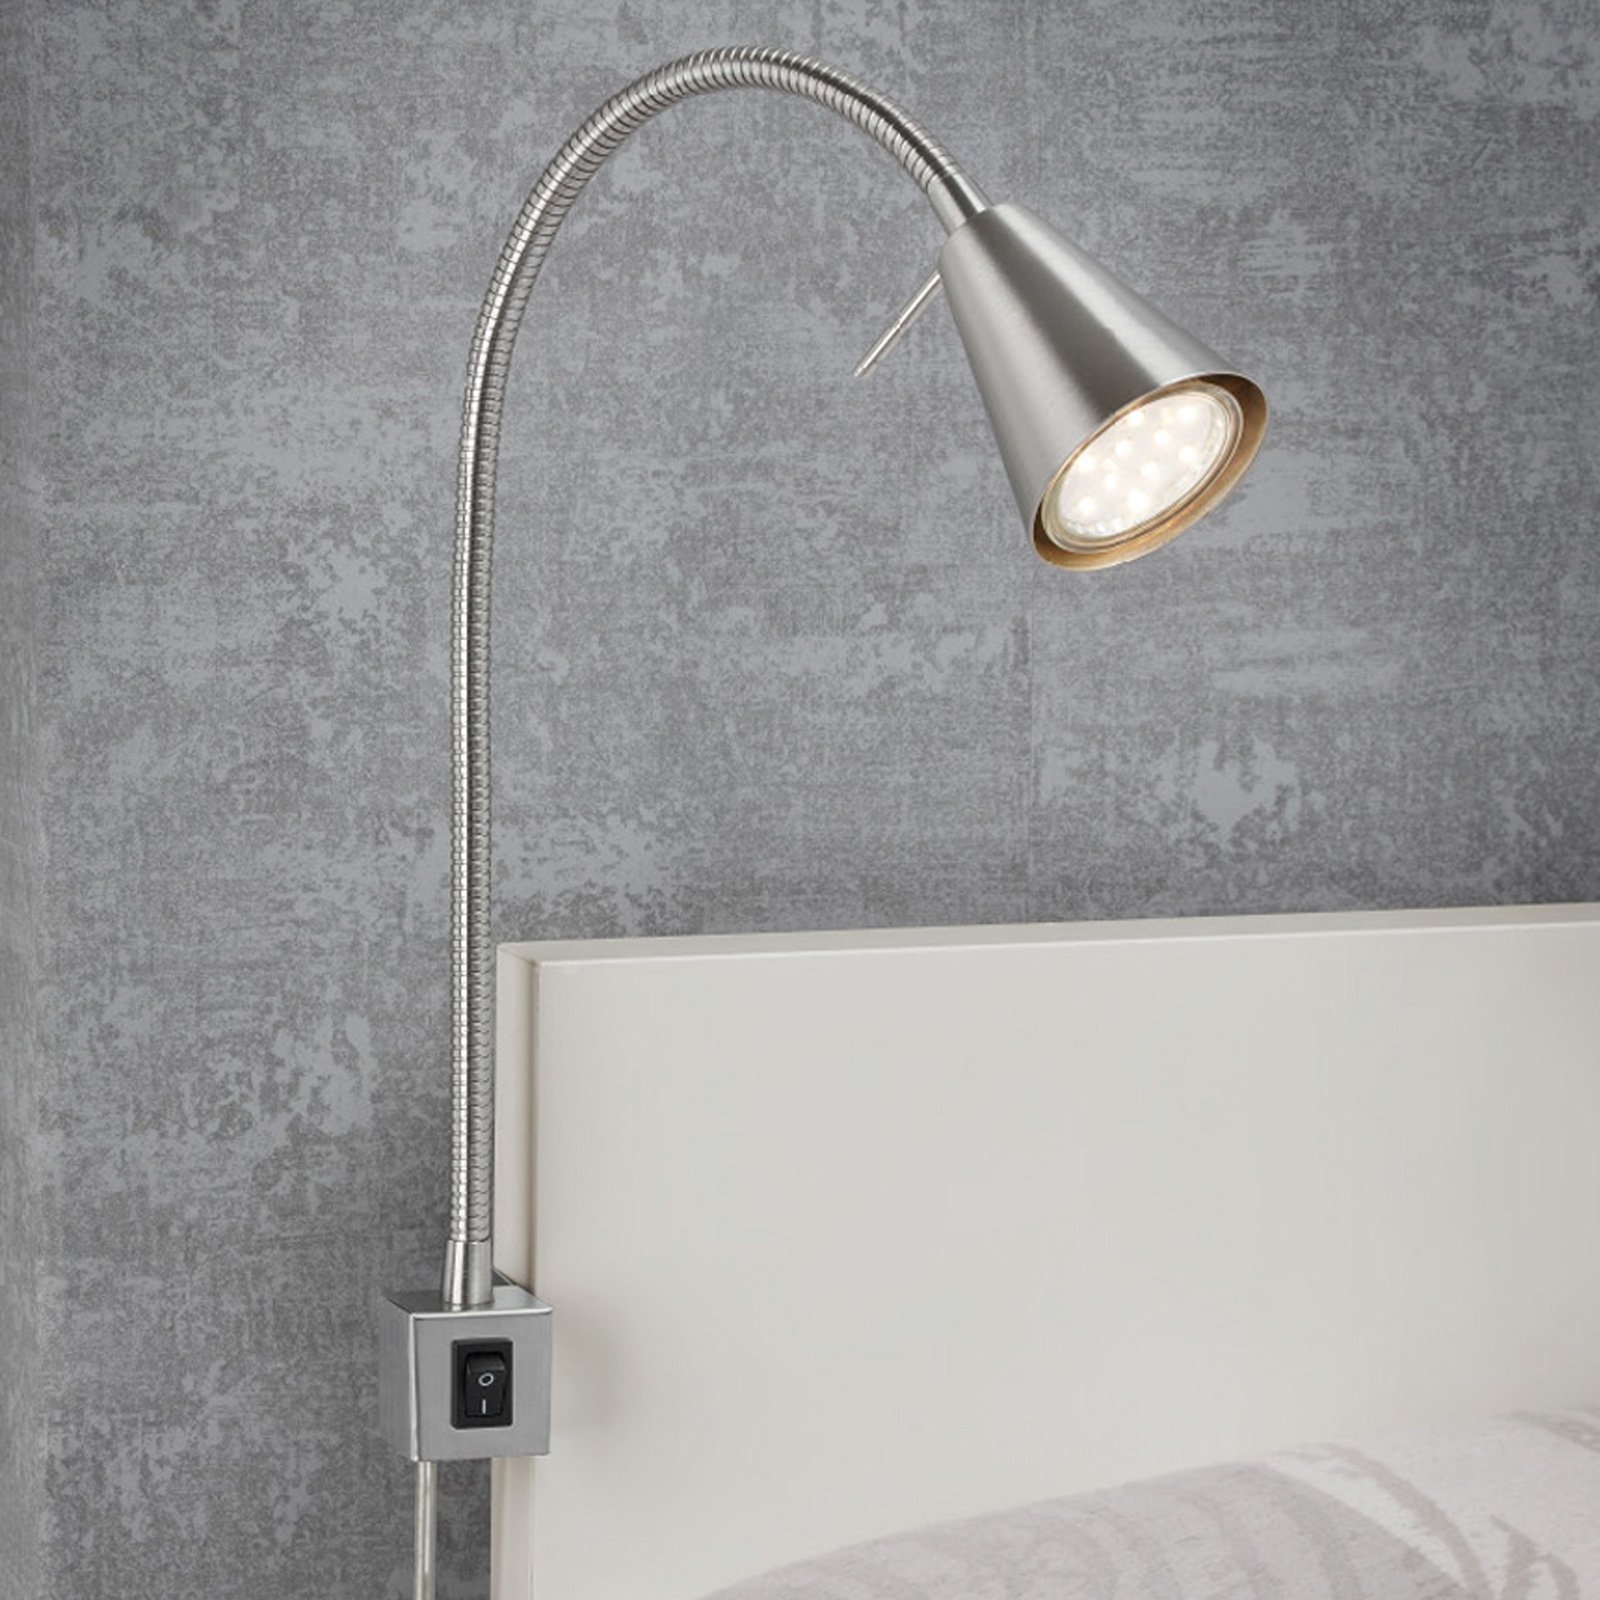 Tuso LED wall lamp, bed-mounted, nickel